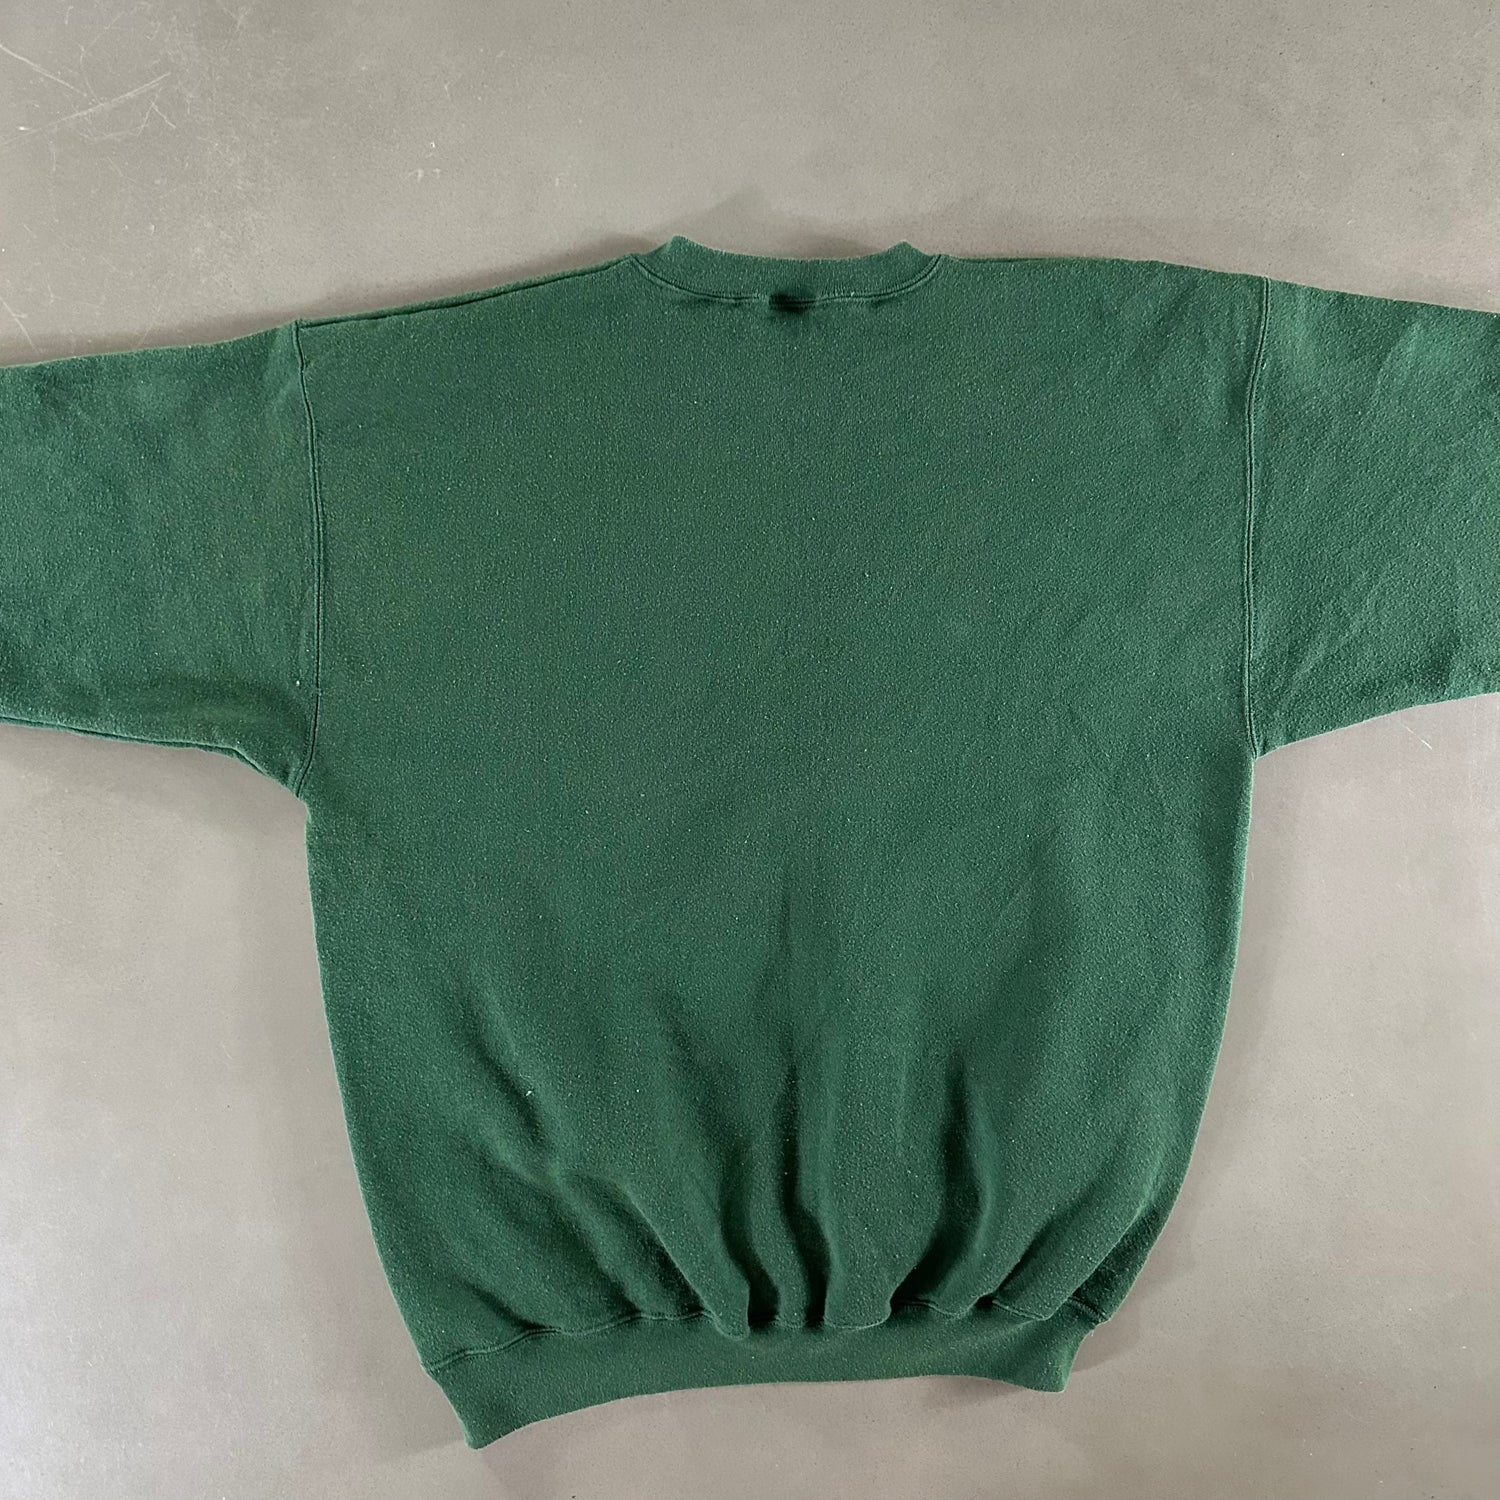 Vintage 1990s Merry Christmas Sweatshirt size XL